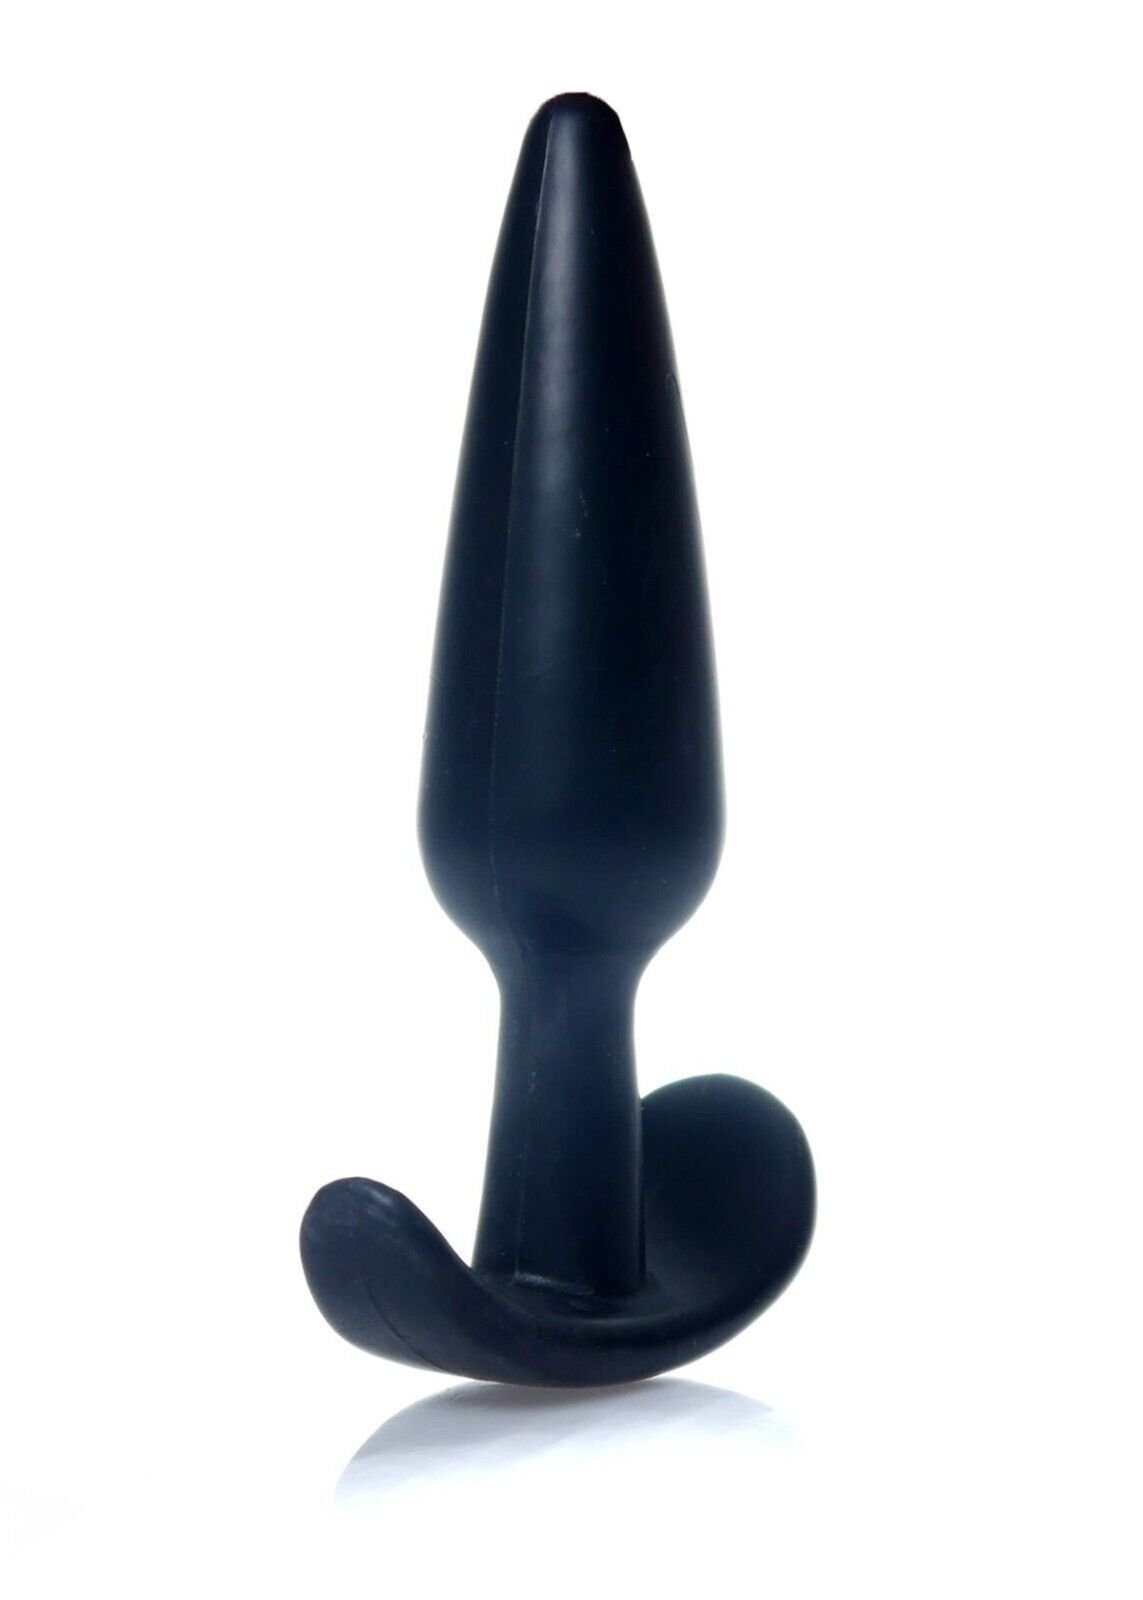 Sexspielzeug T-Plug Analplug Lang Weich Anal Plug 12cm Stöpsel denu-shop Anal